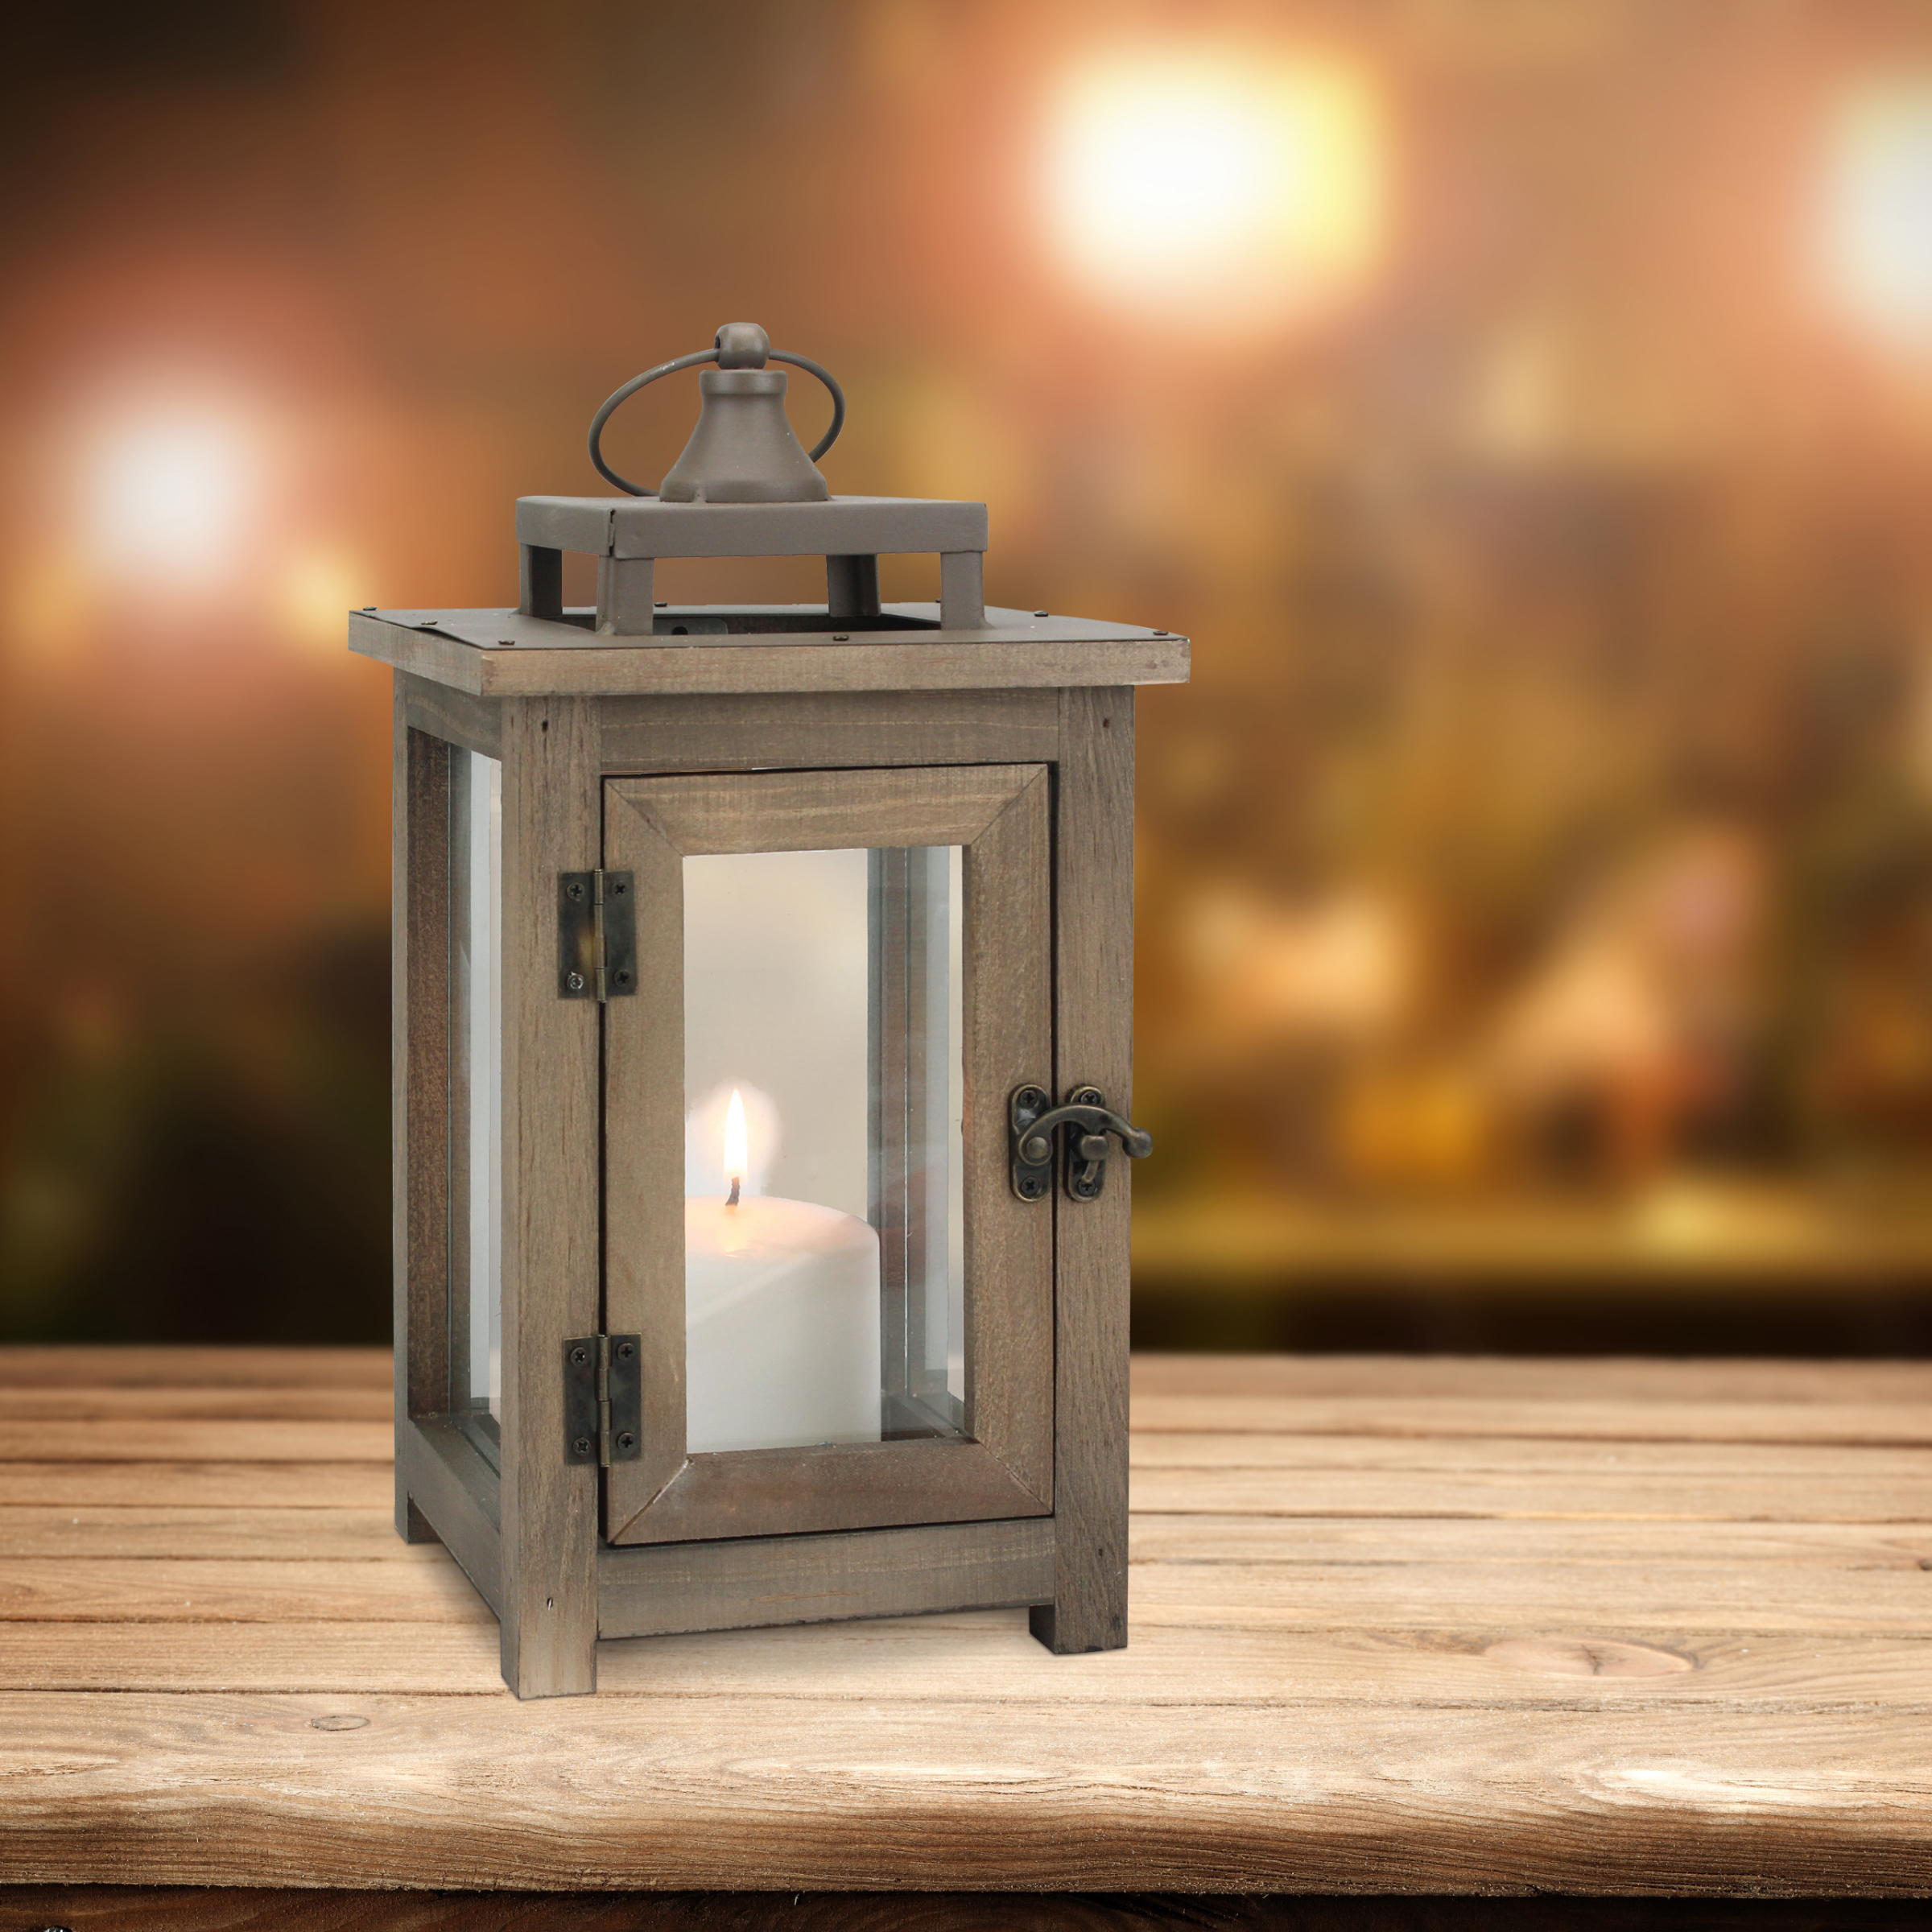 Better Homes & Gardens Medium Lantern with Farmhouse Rustic Finish - image 4 of 6